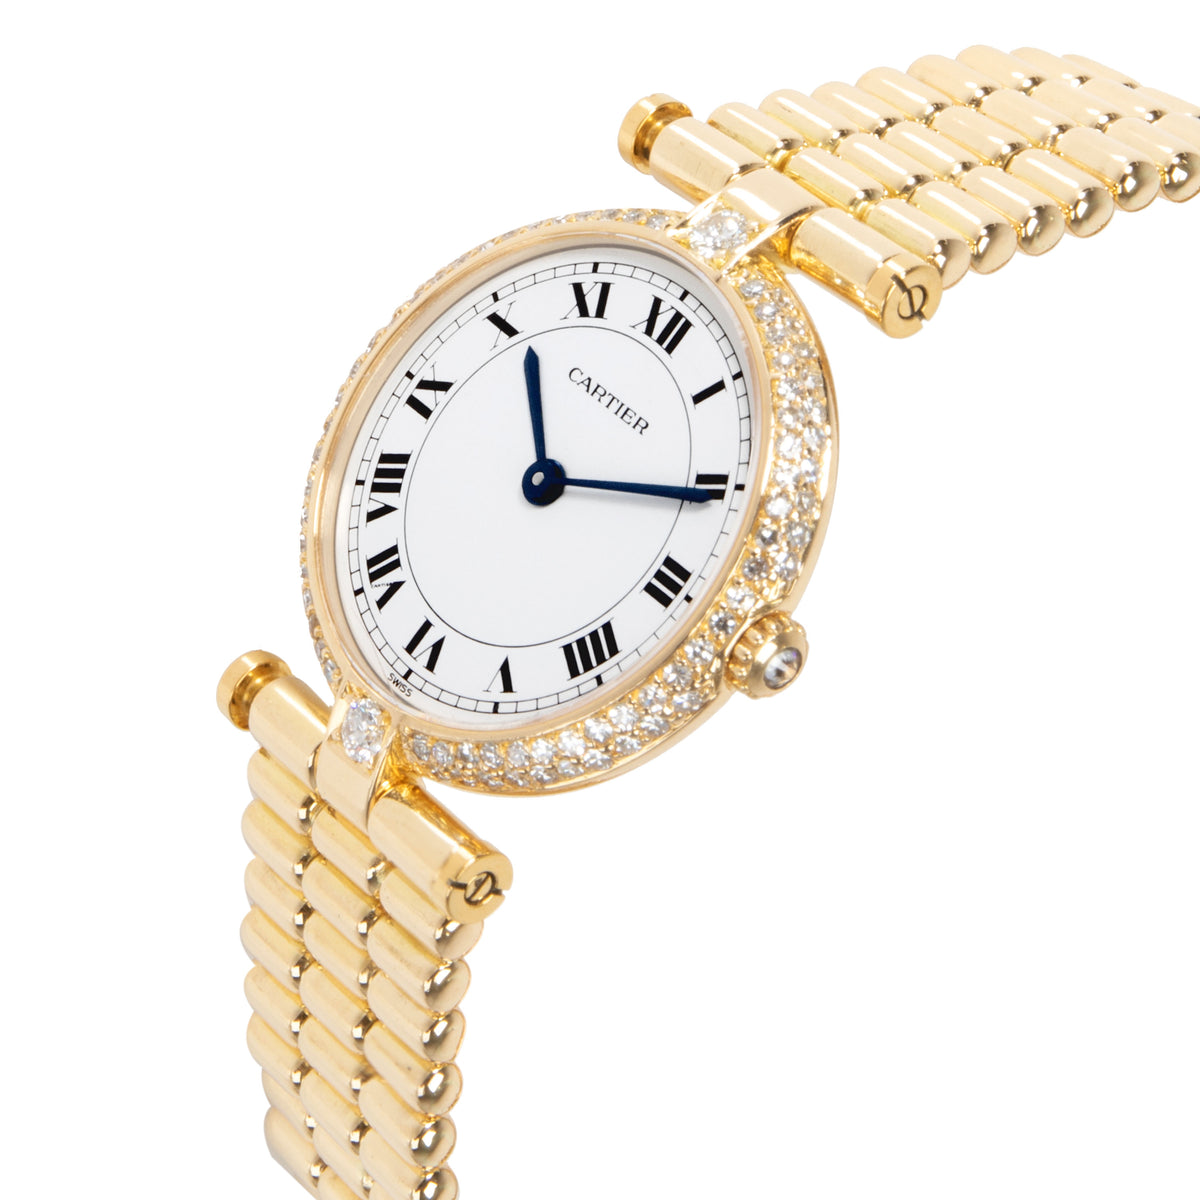 Cartier Vendome L.C. 8107 Women's Watch in 18kt Yellow Gold